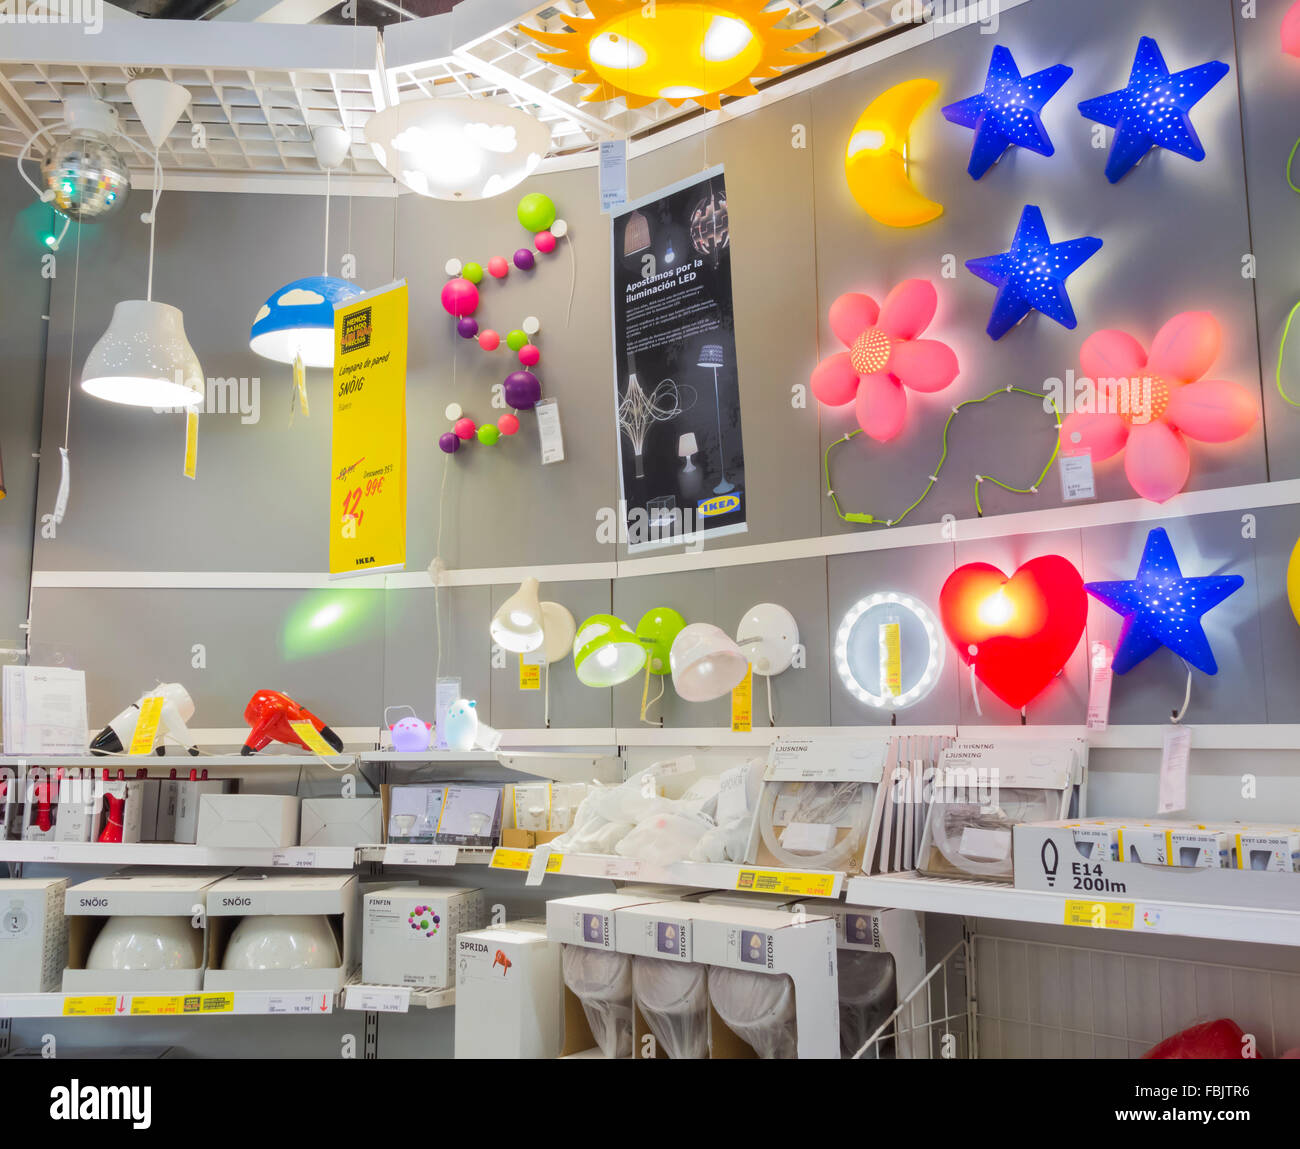 Lighting display in Ikea store, Spain Stock Photo